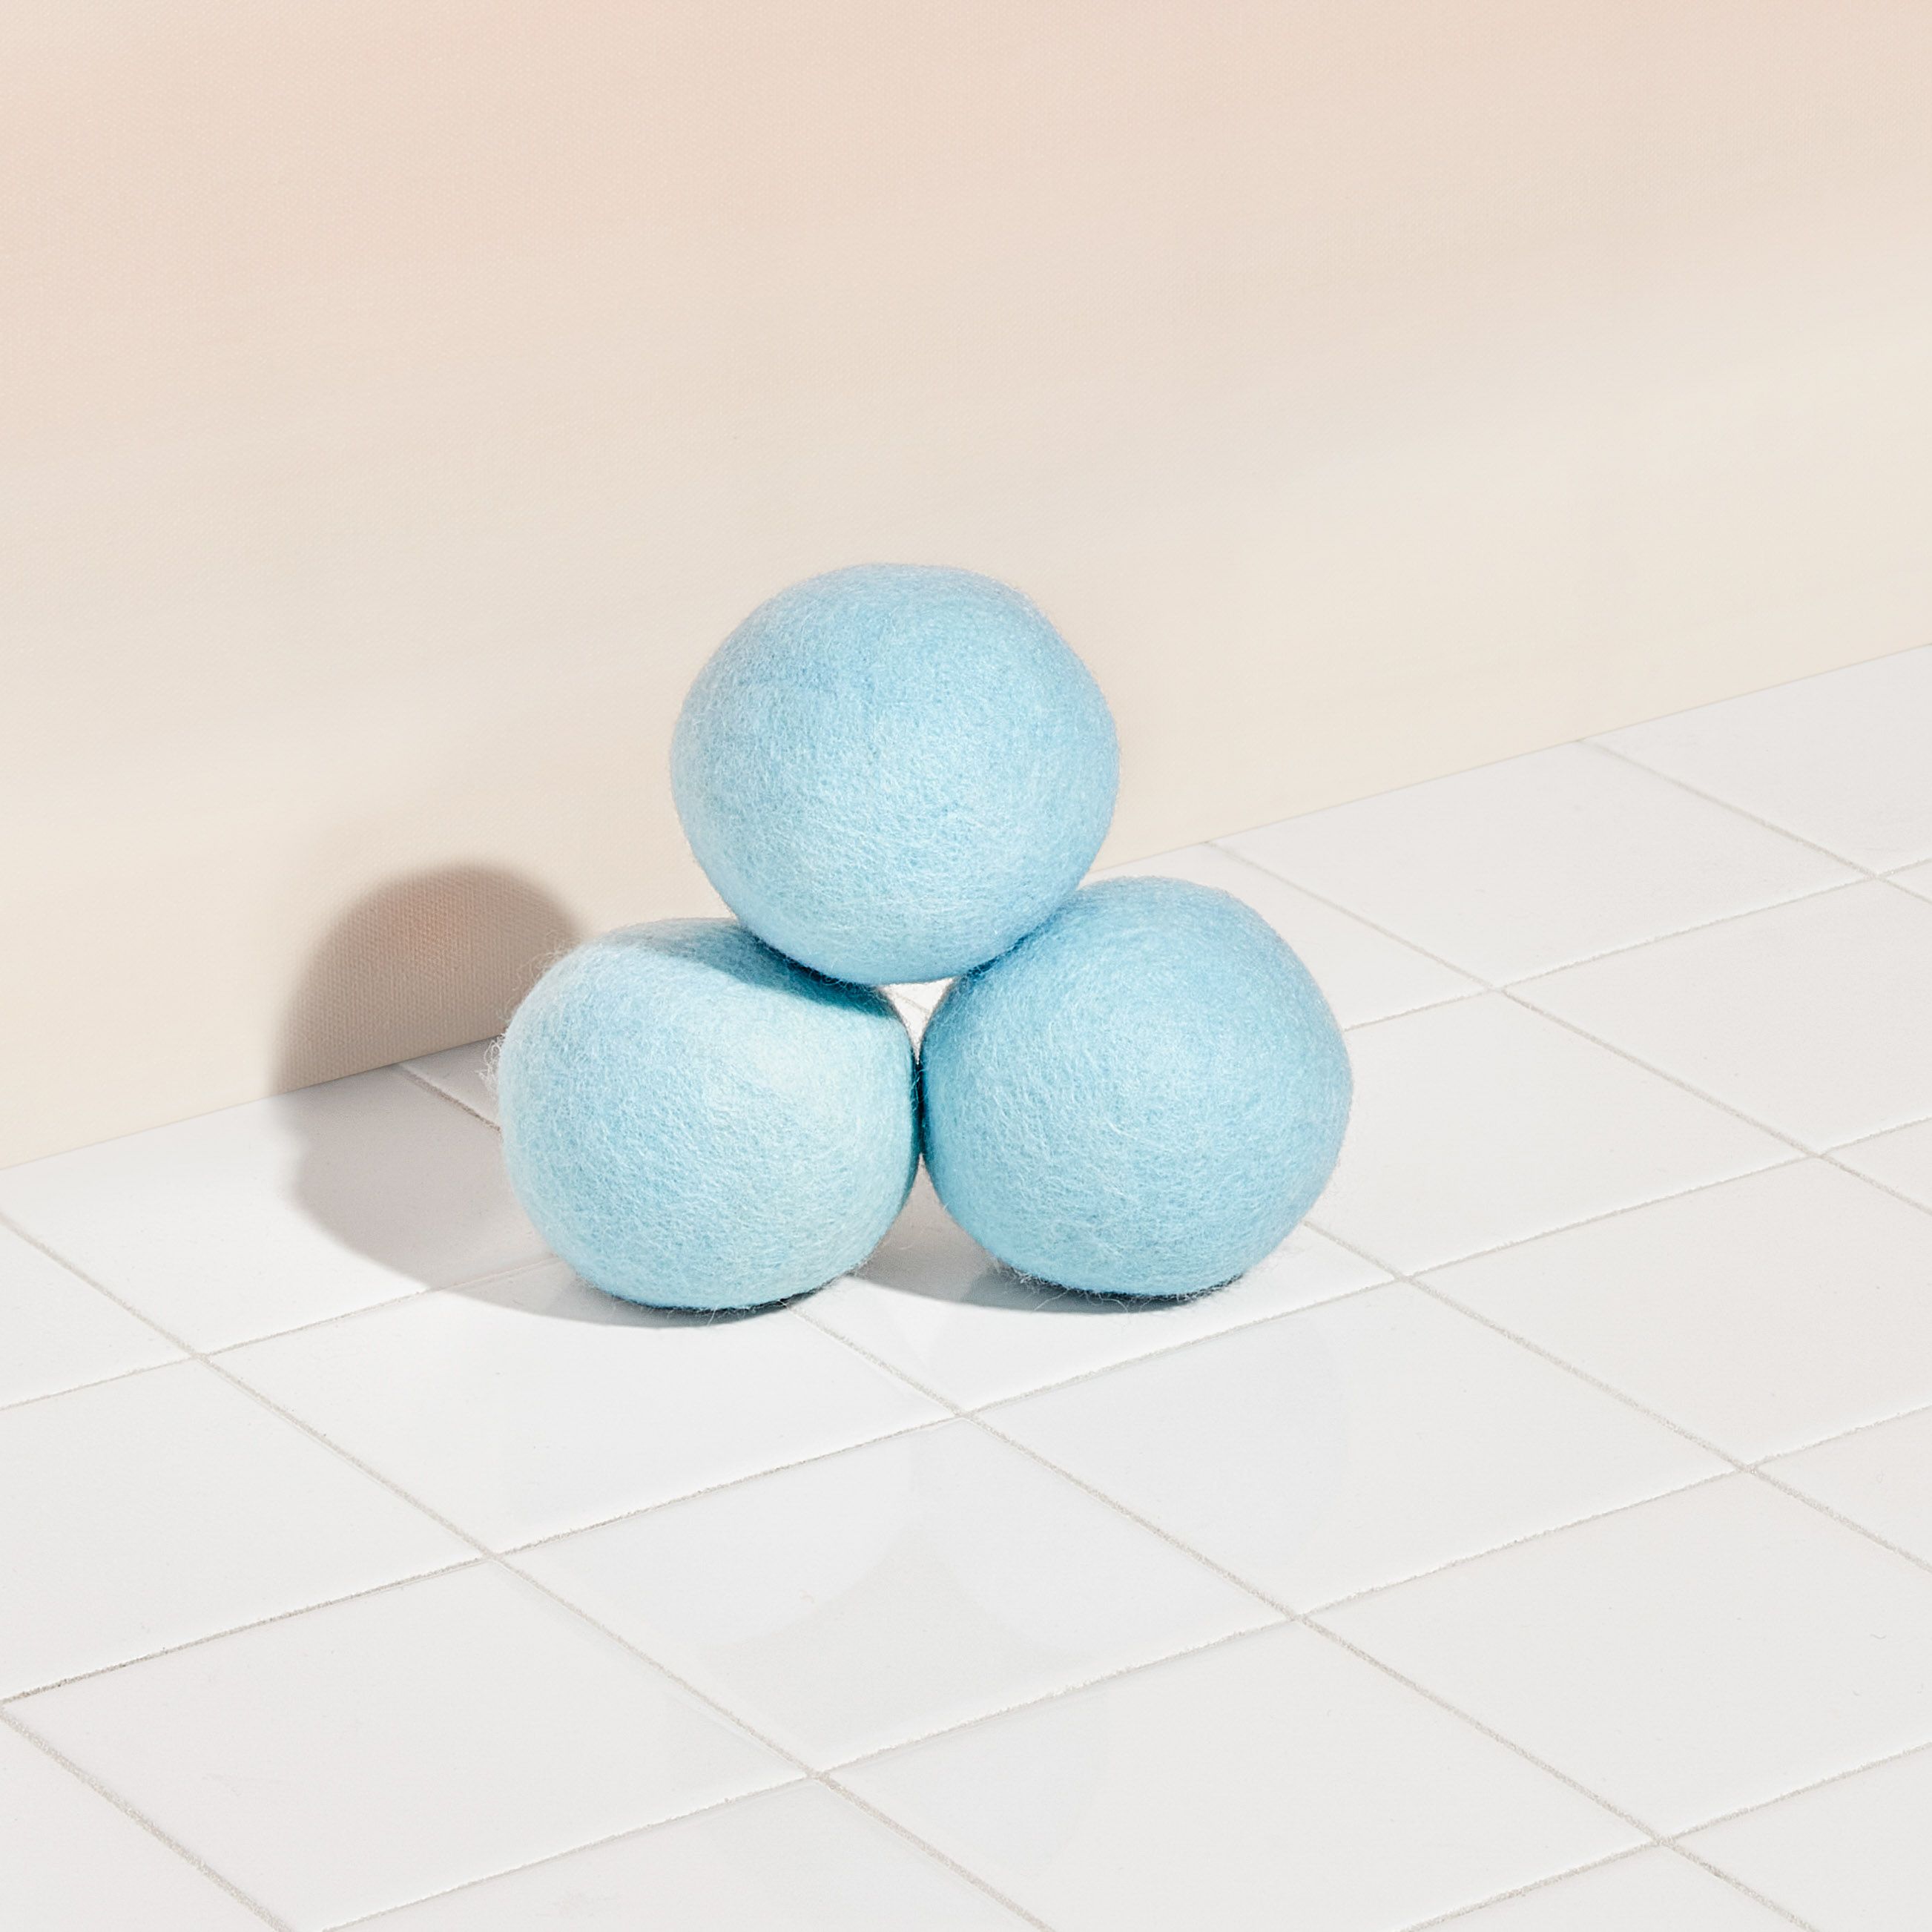 4x Blue PVC Reusable Dryer Balls Laundry Washing Drying Fabric Softener Ball GL 